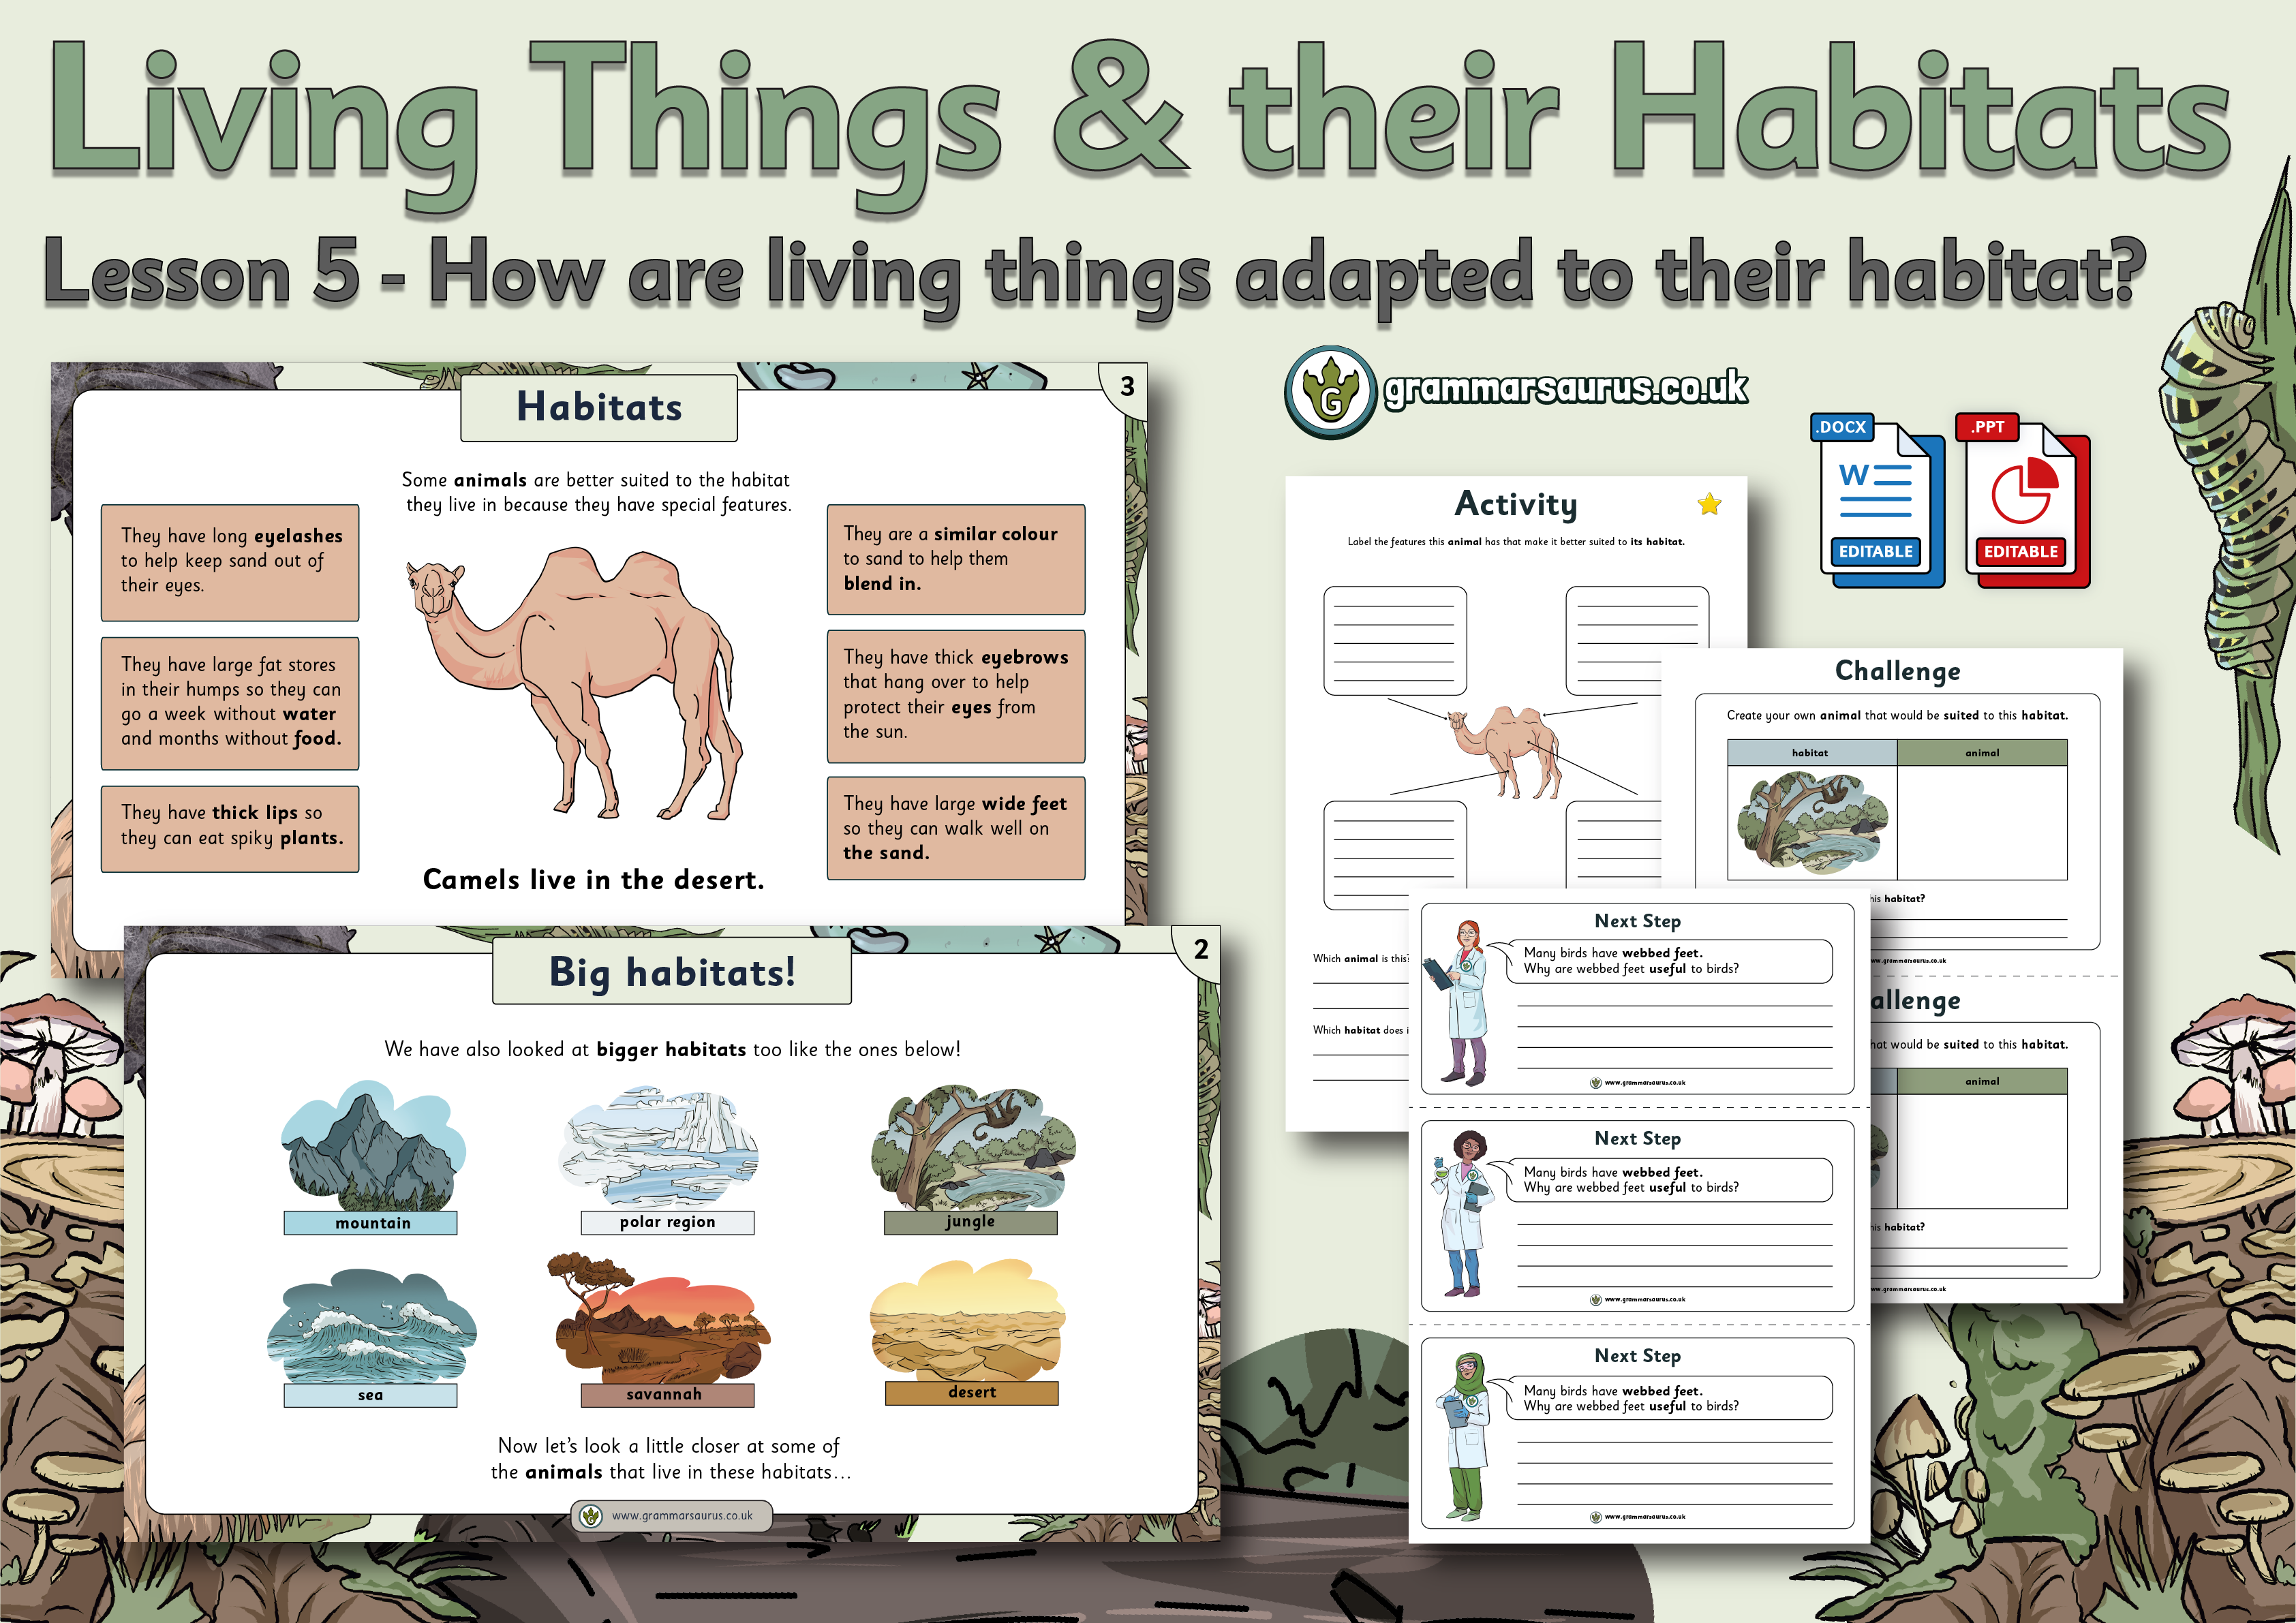 Year 2 Science - Living Things and their Habitats - How are living things  adapted to their habitat? Lesson 5 - Grammarsaurus